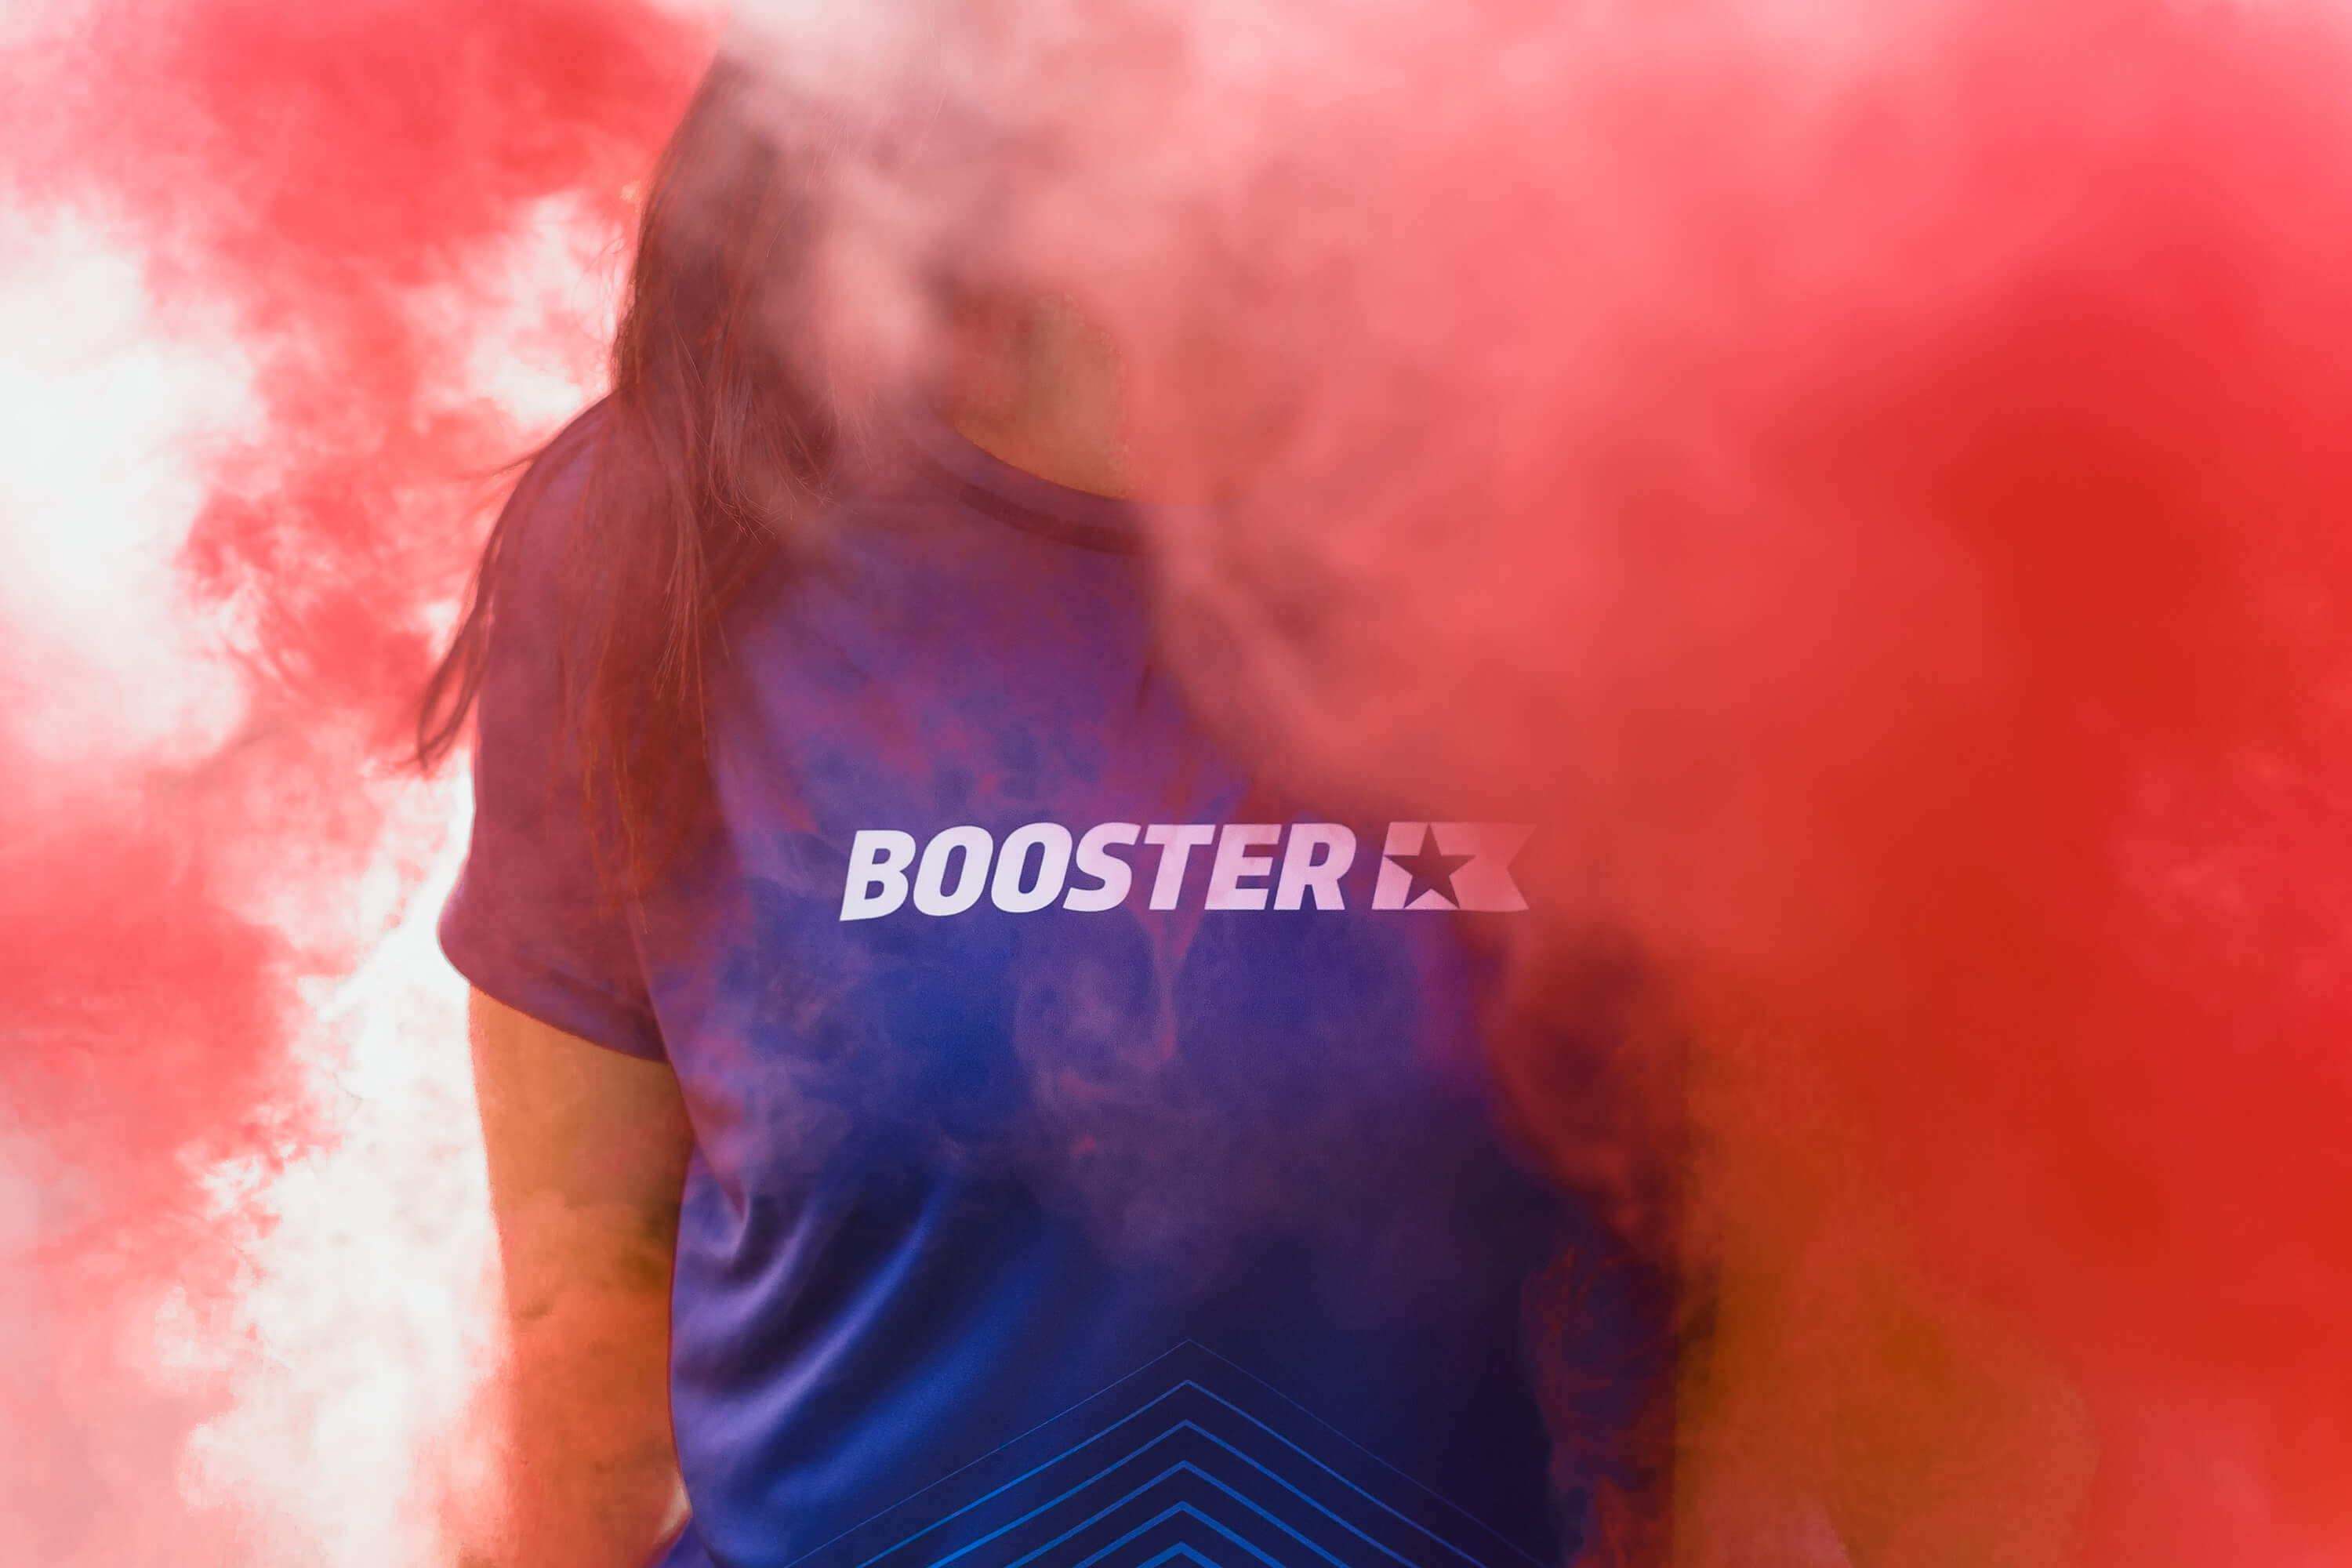 custom-imagery-photo-booster-blue-shirt-red-smoke-01.jpg